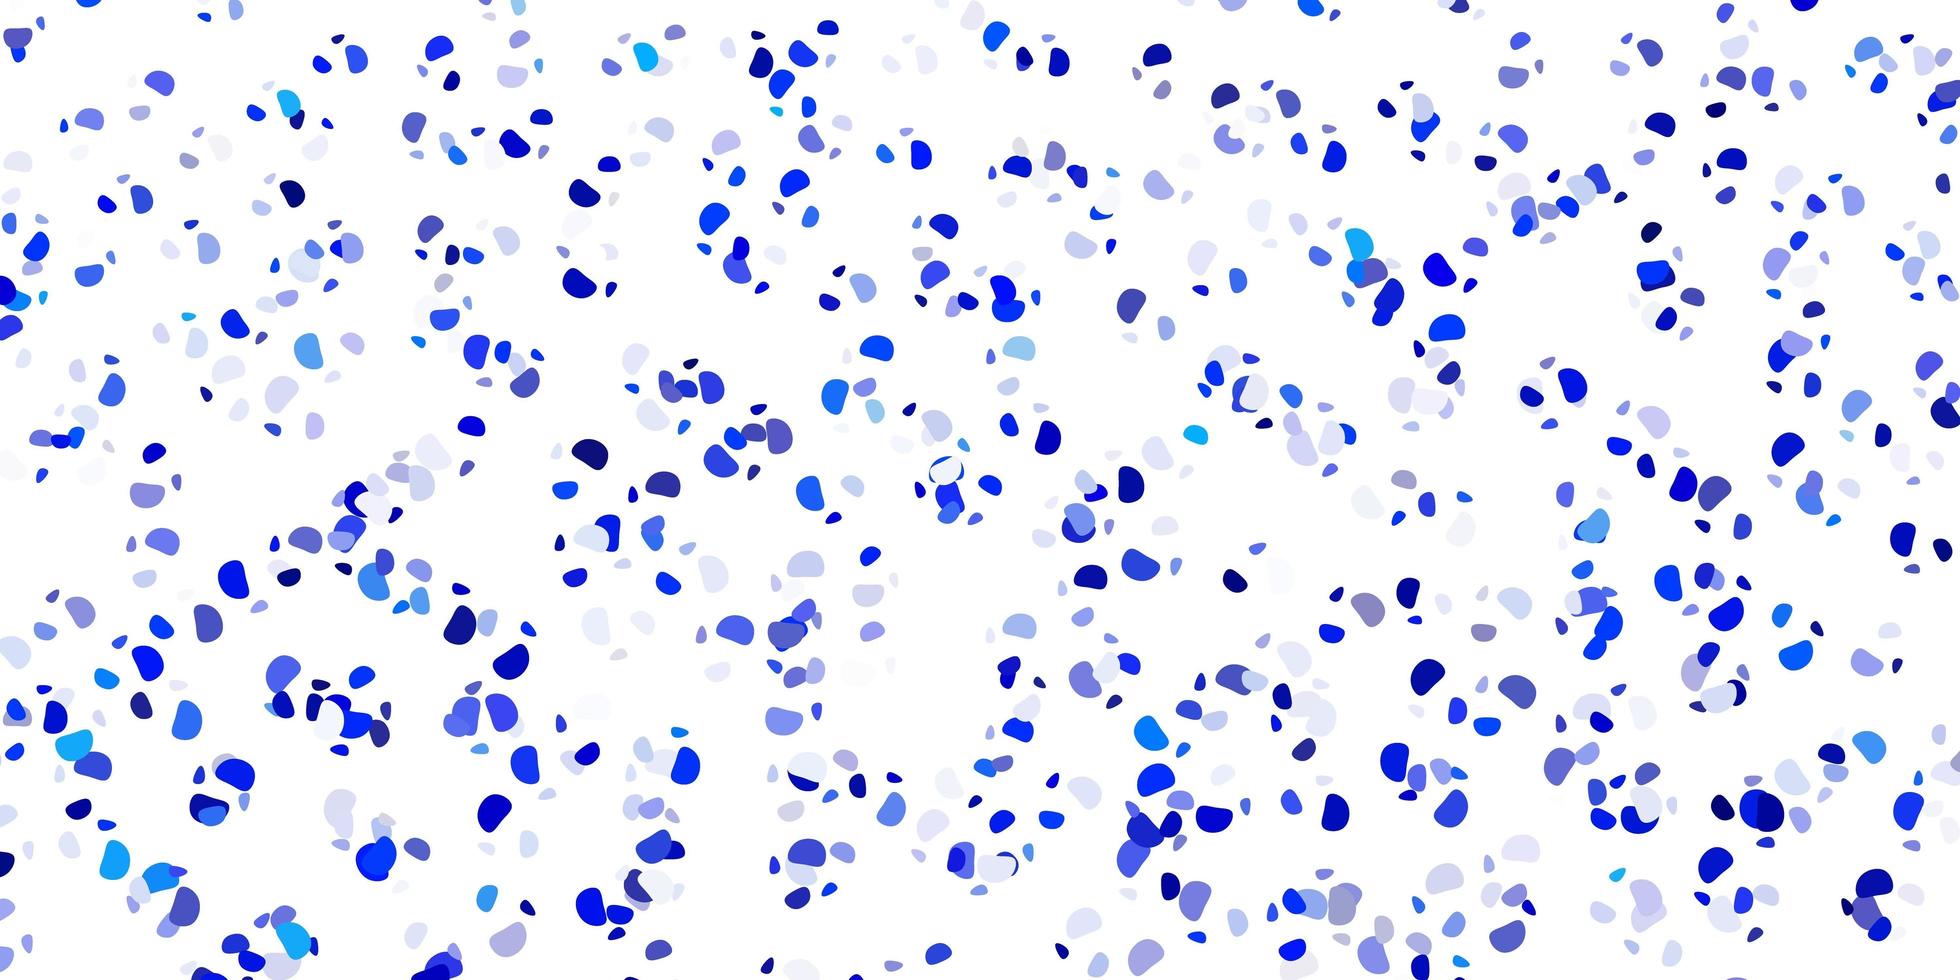 pano de fundo vector azul claro com formas caóticas.